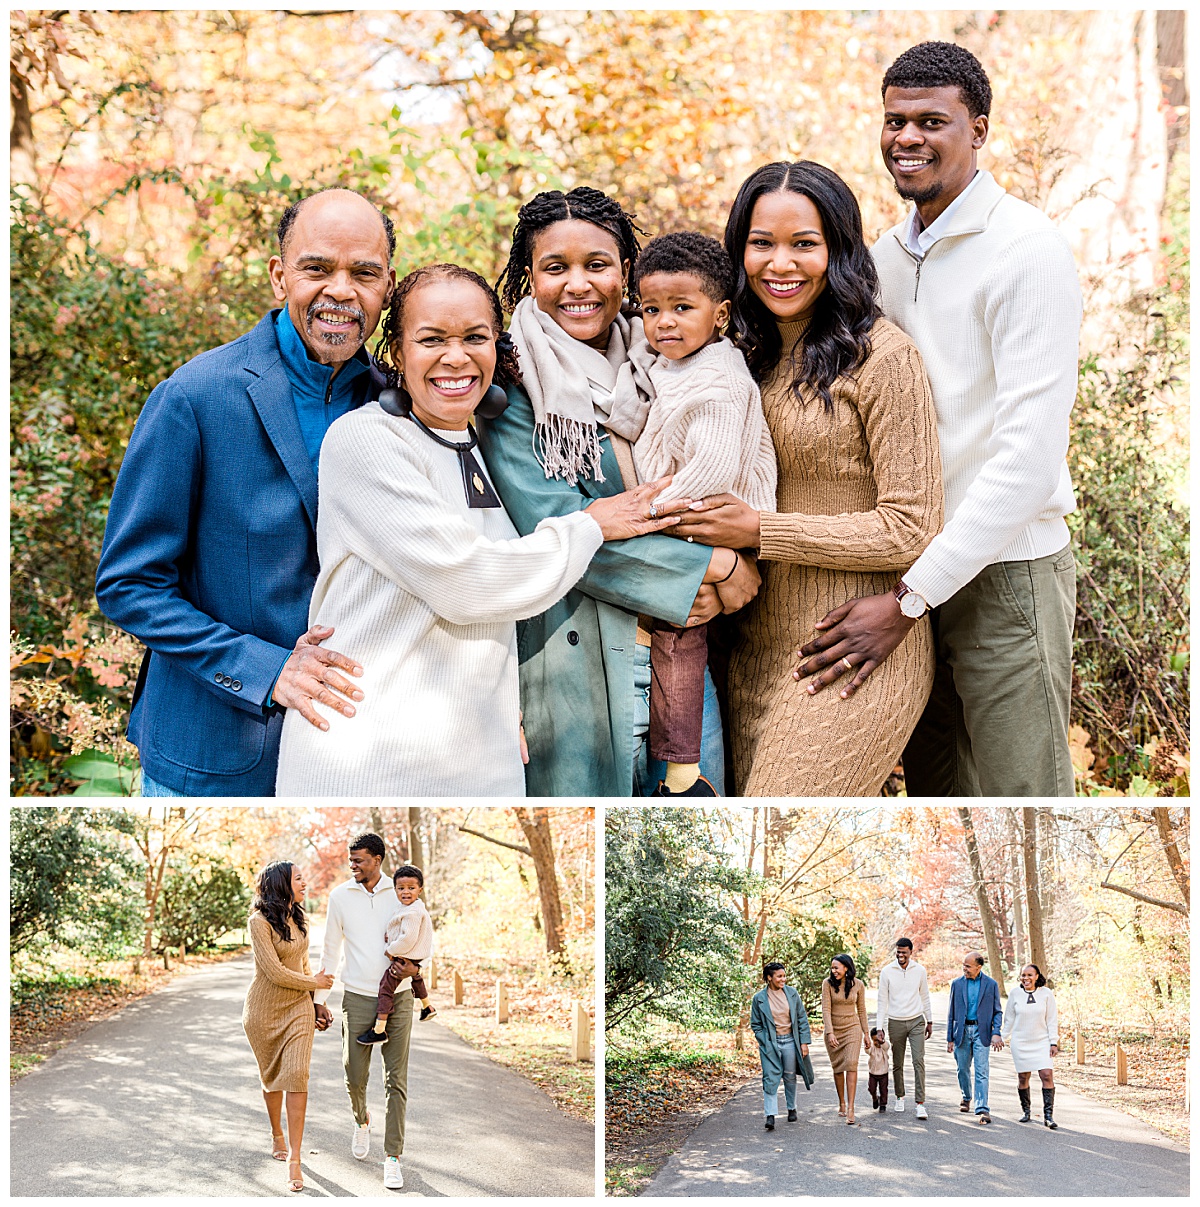 Fall mini session for a family of six at Awbury Arboretum taken by Ann Blake Photography, a Philadelphia family photographer.